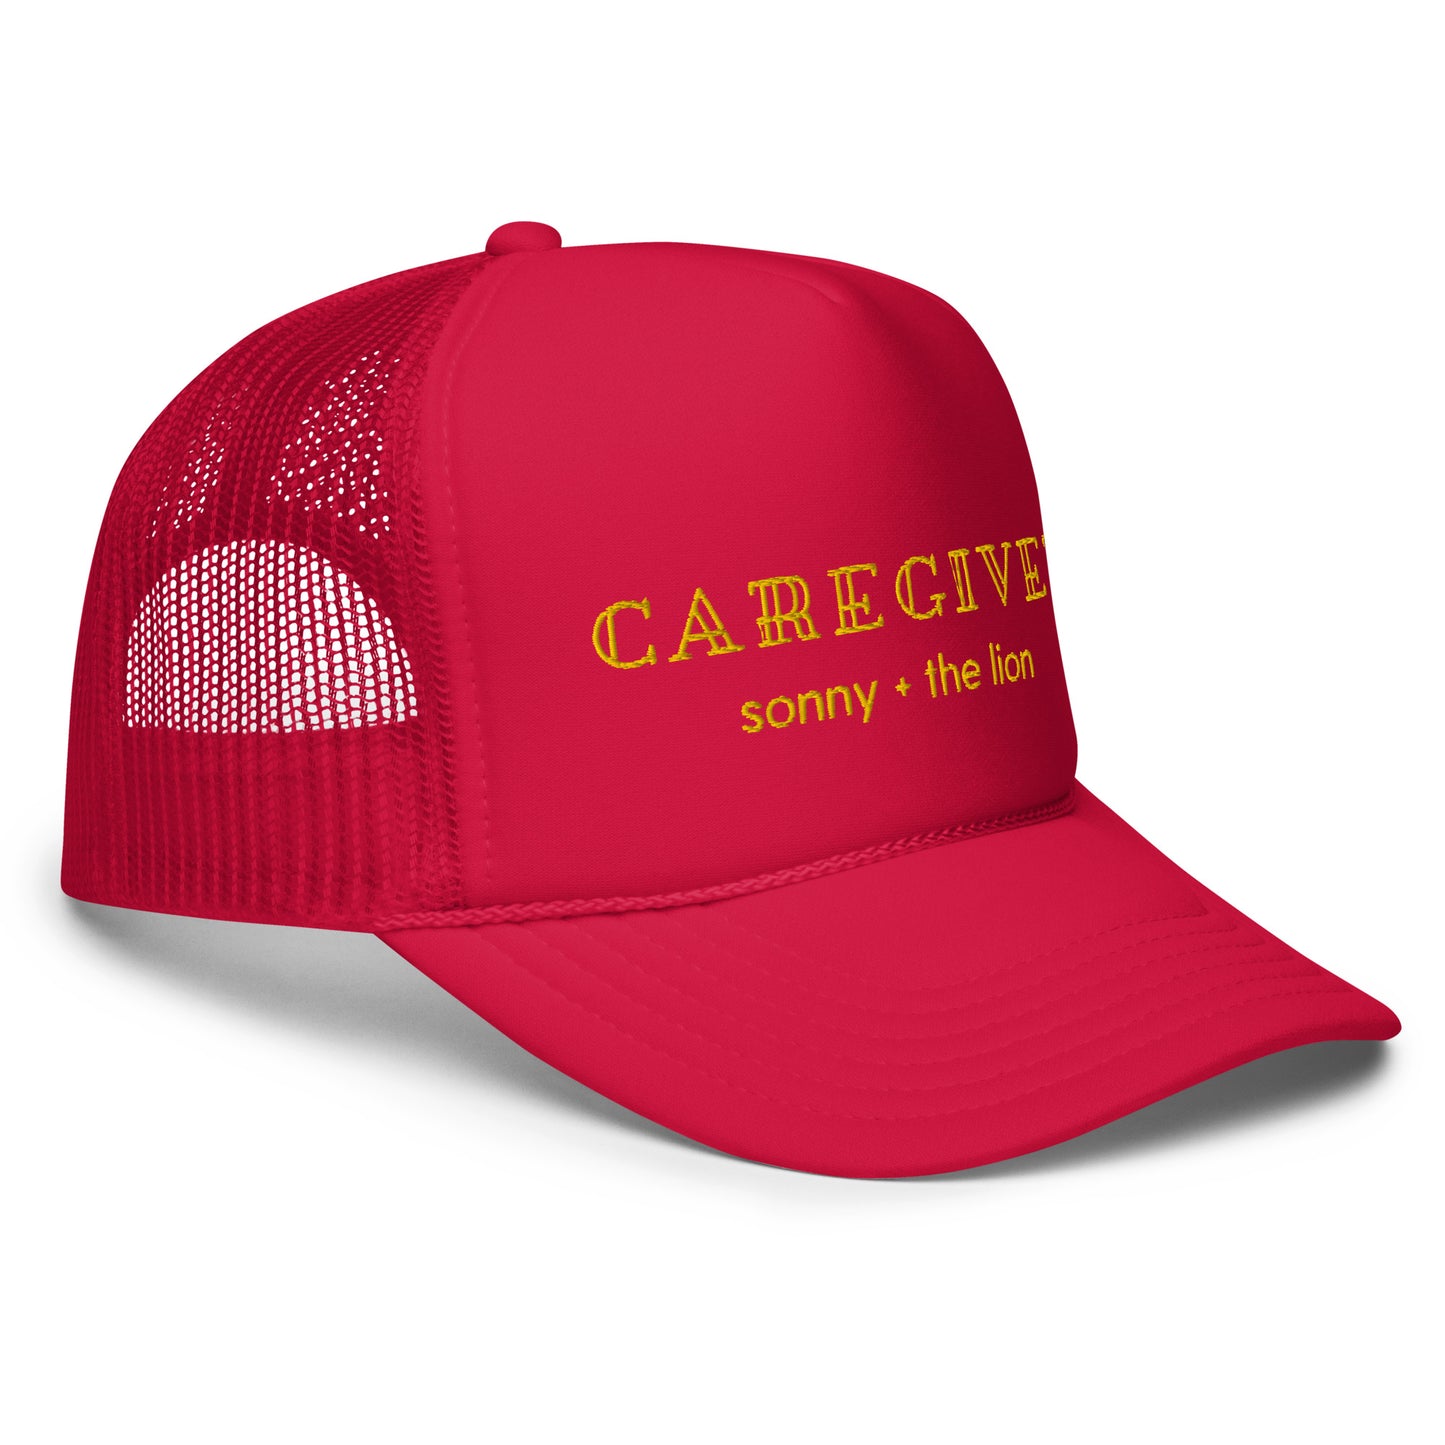 Caregiver Embroidered Foam Trucker Hat